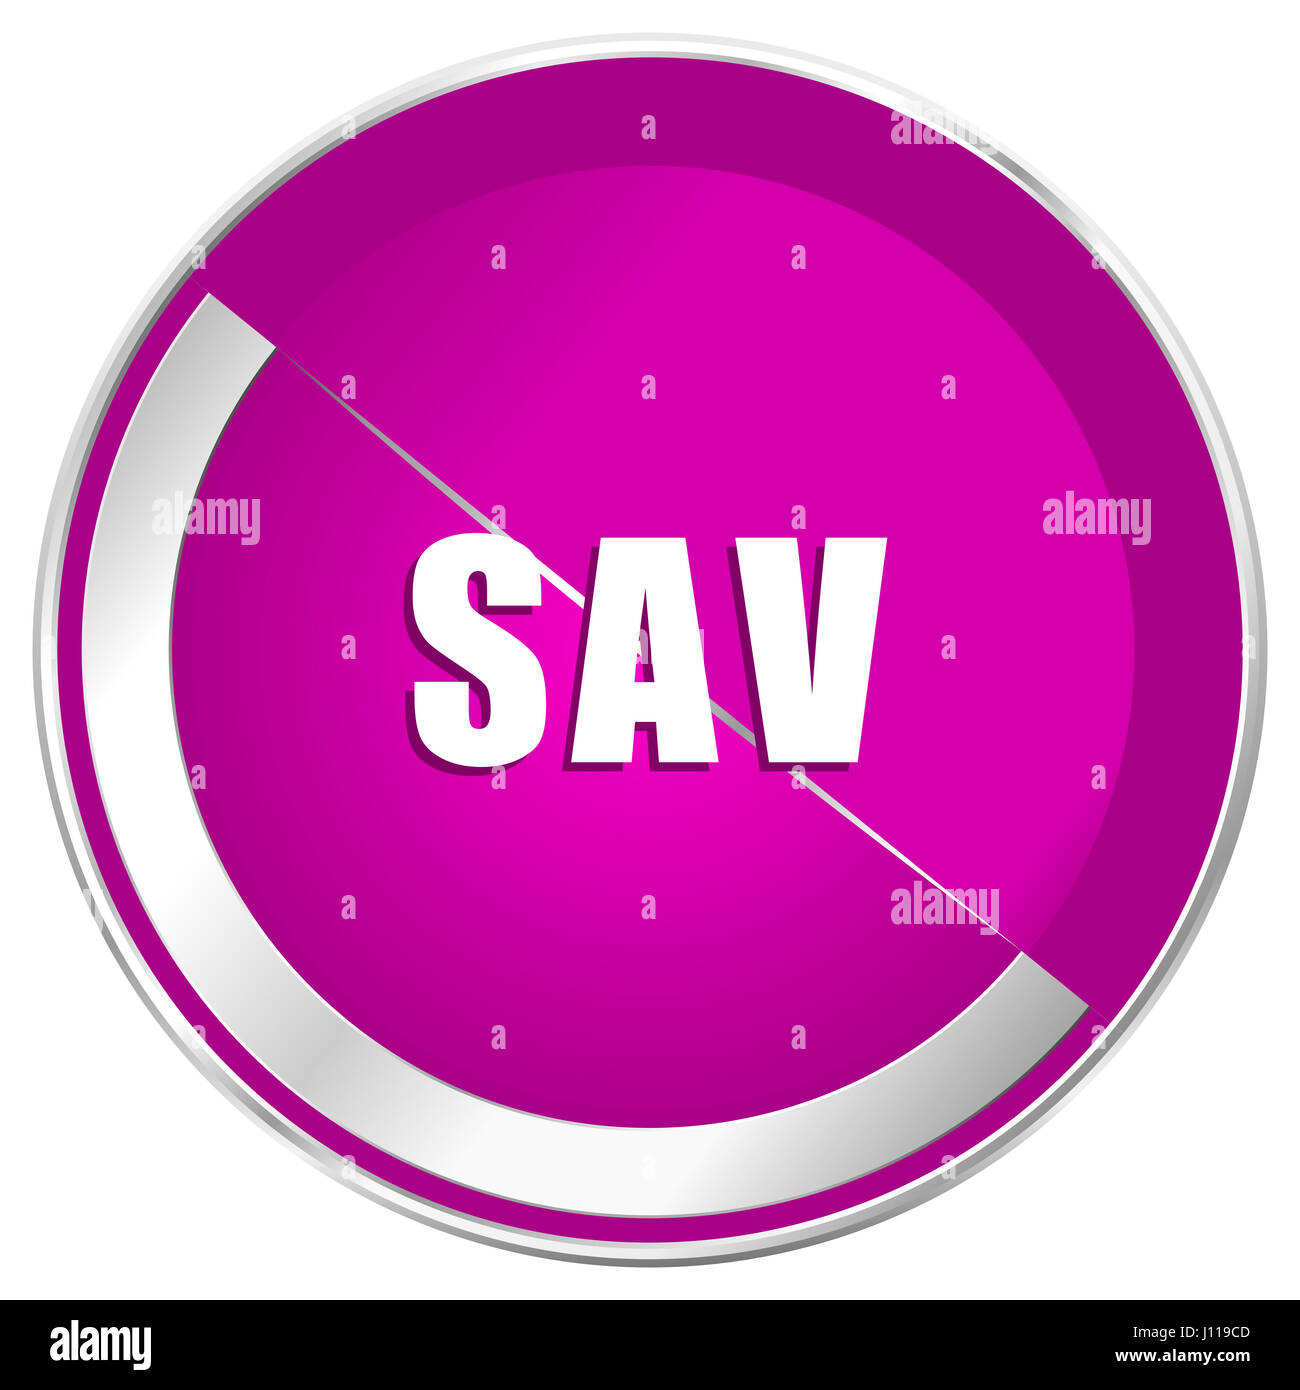 Sav web design violet silver metallic border internet icon. Stock Photo